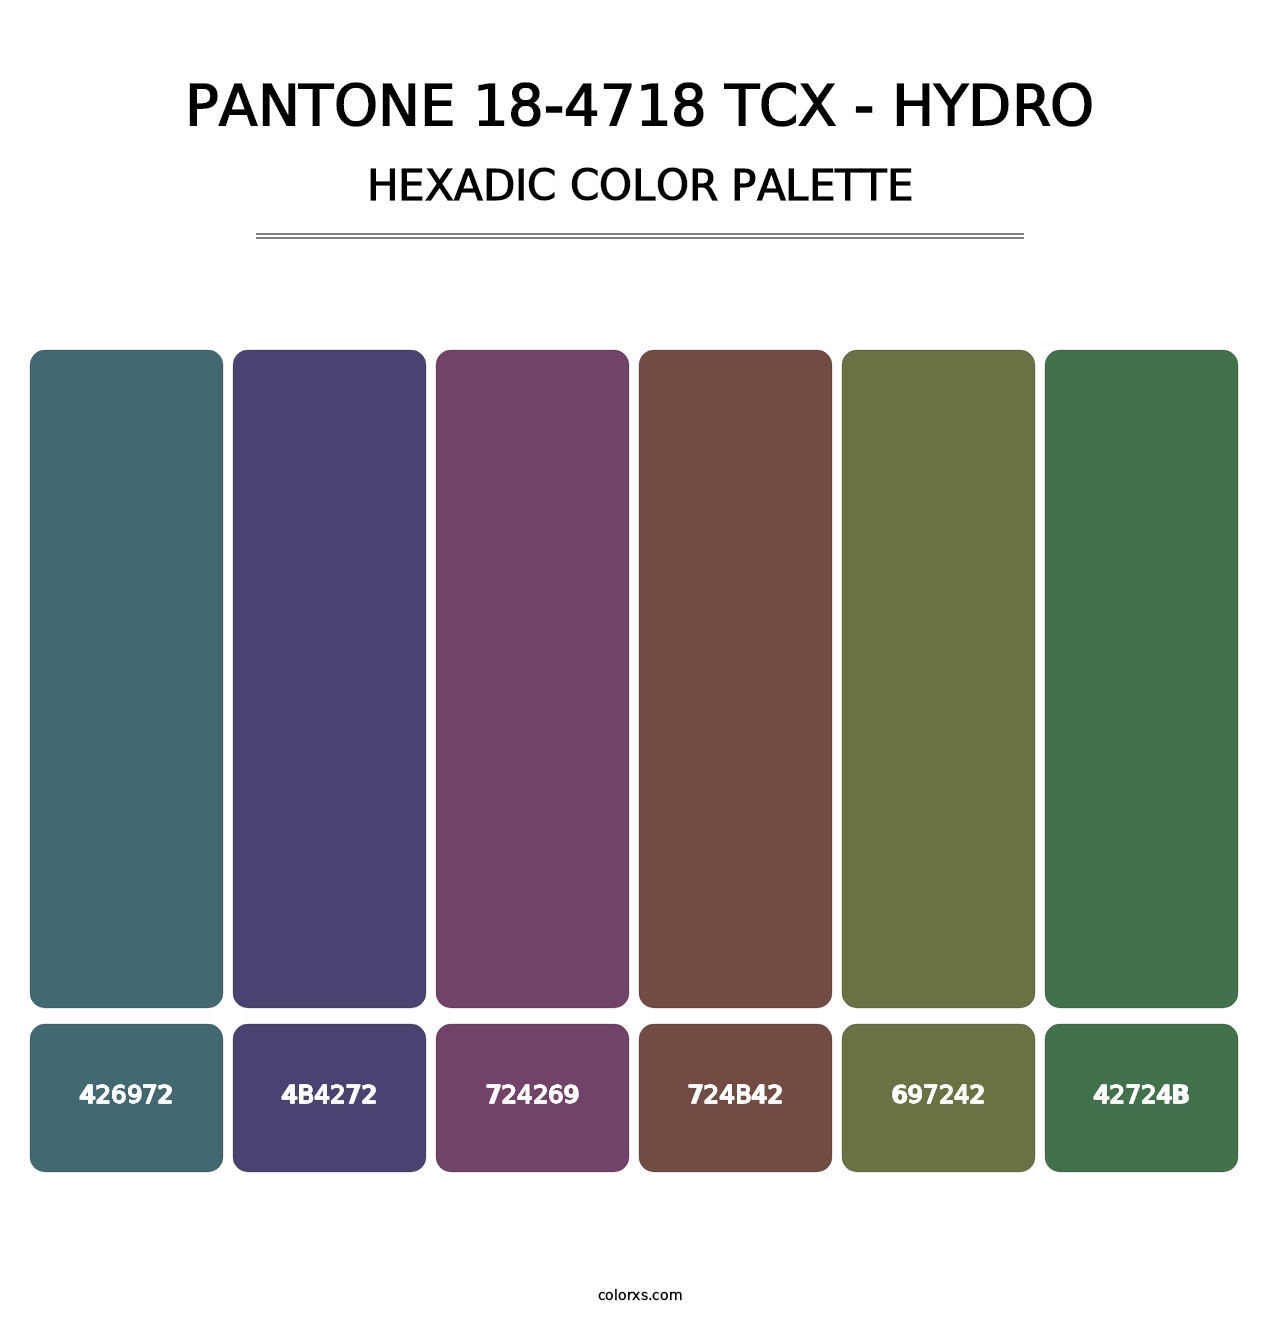 PANTONE 18-4718 TCX - Hydro - Hexadic Color Palette